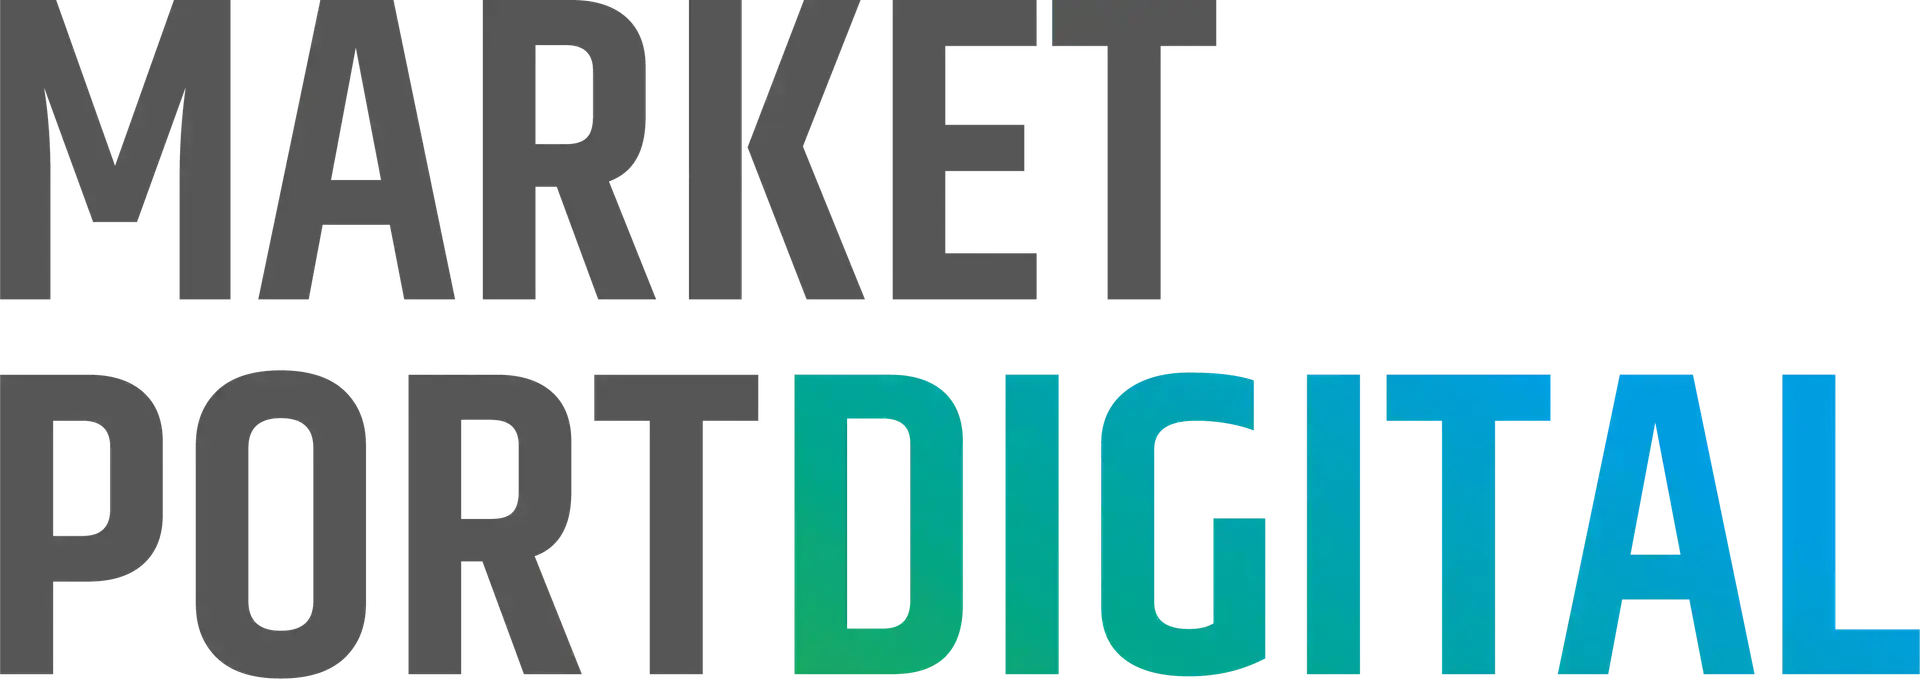 market port logo digital neu - market port GmbH